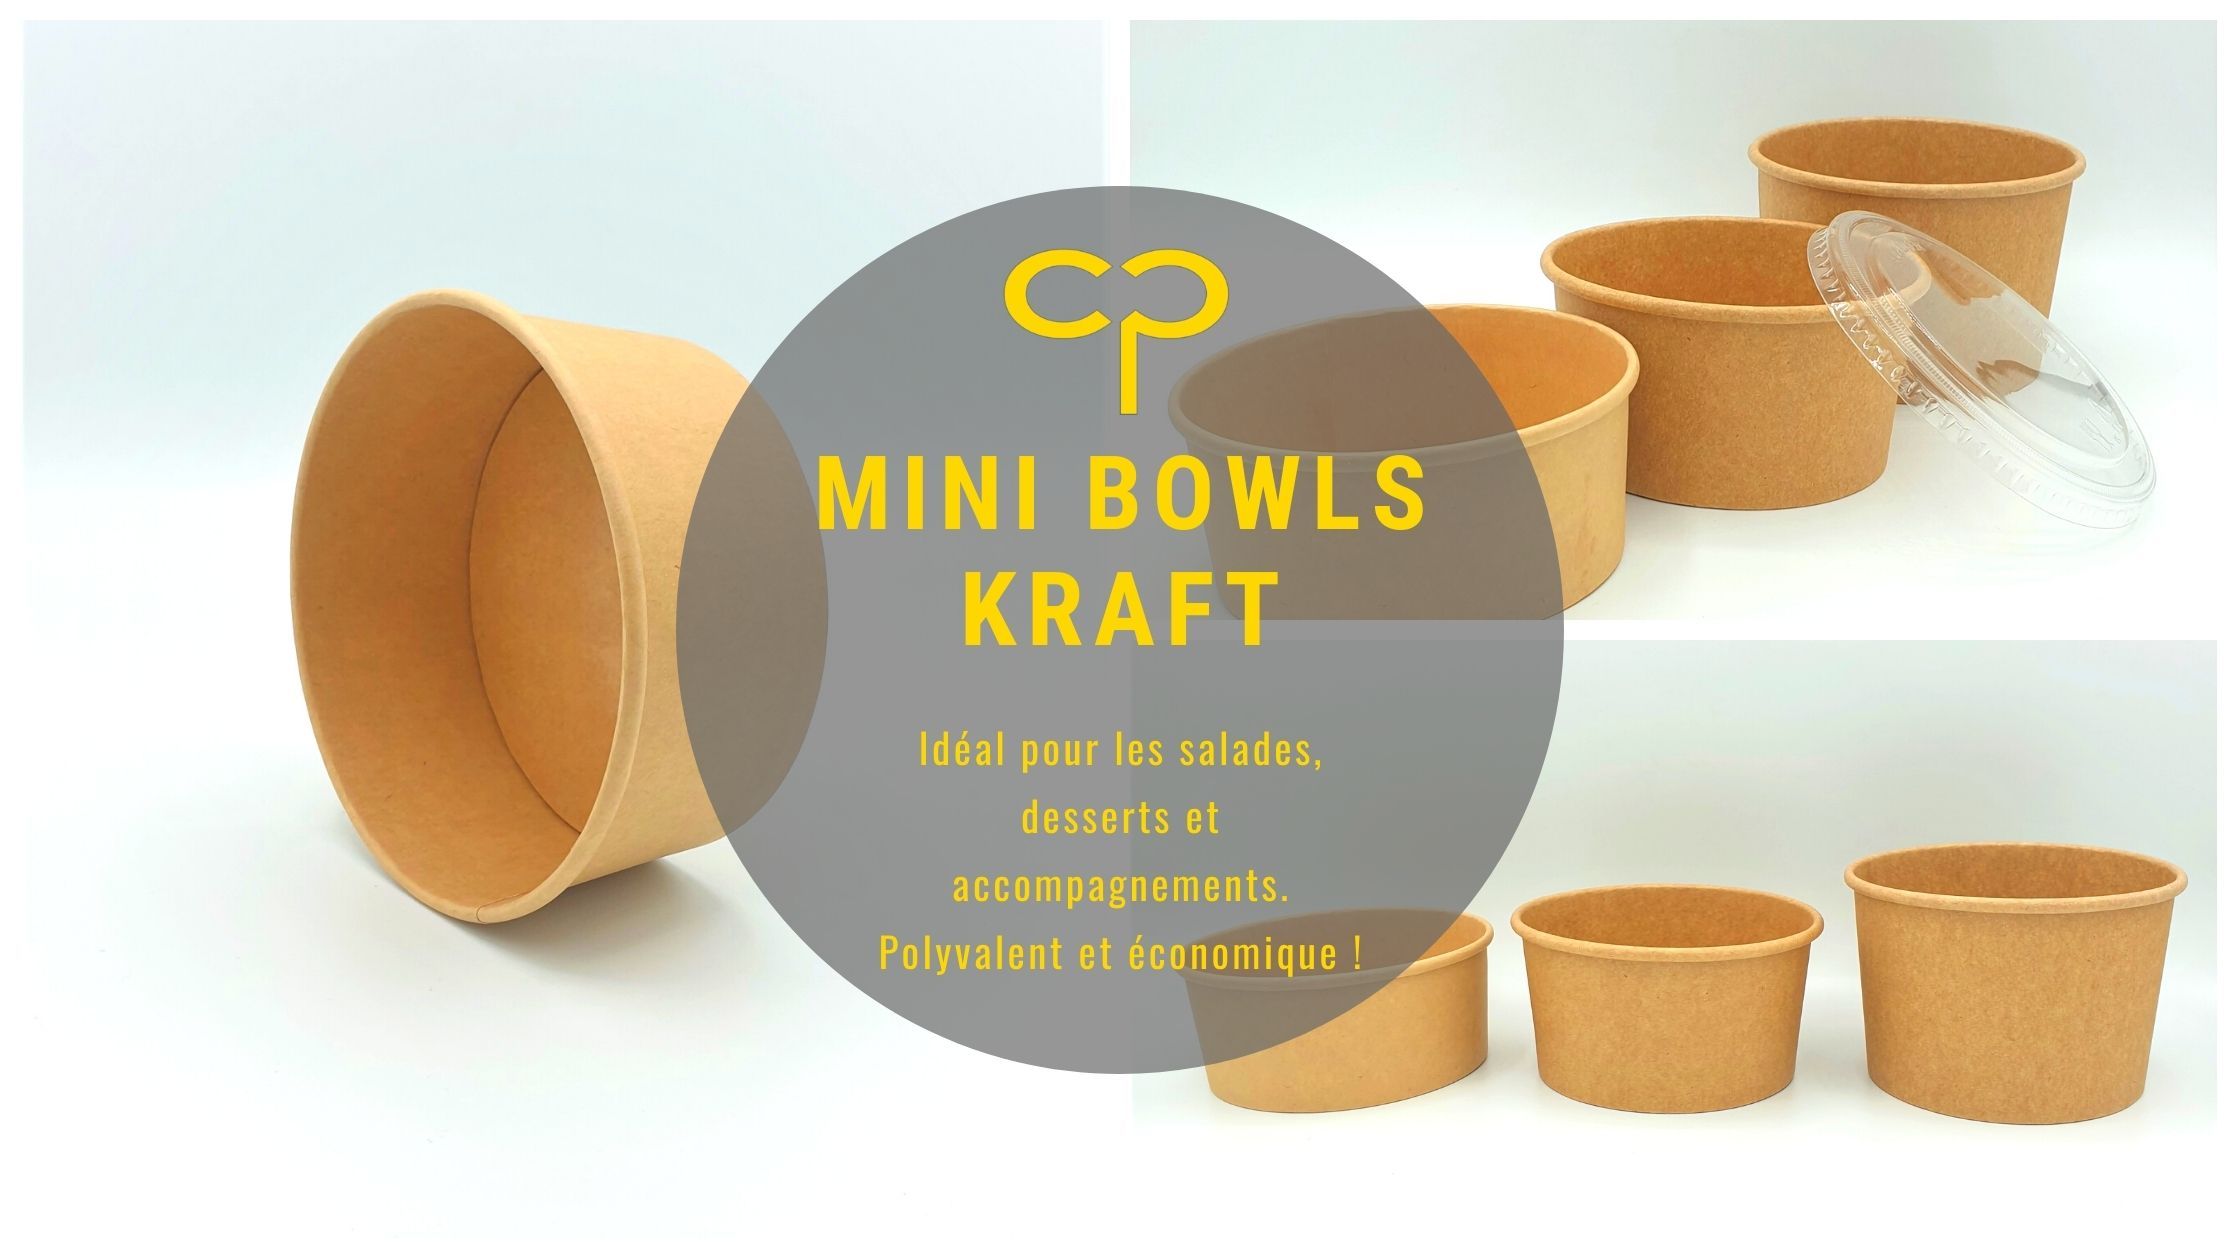 Mini bowls canspack packaging emballage pot kraft bol